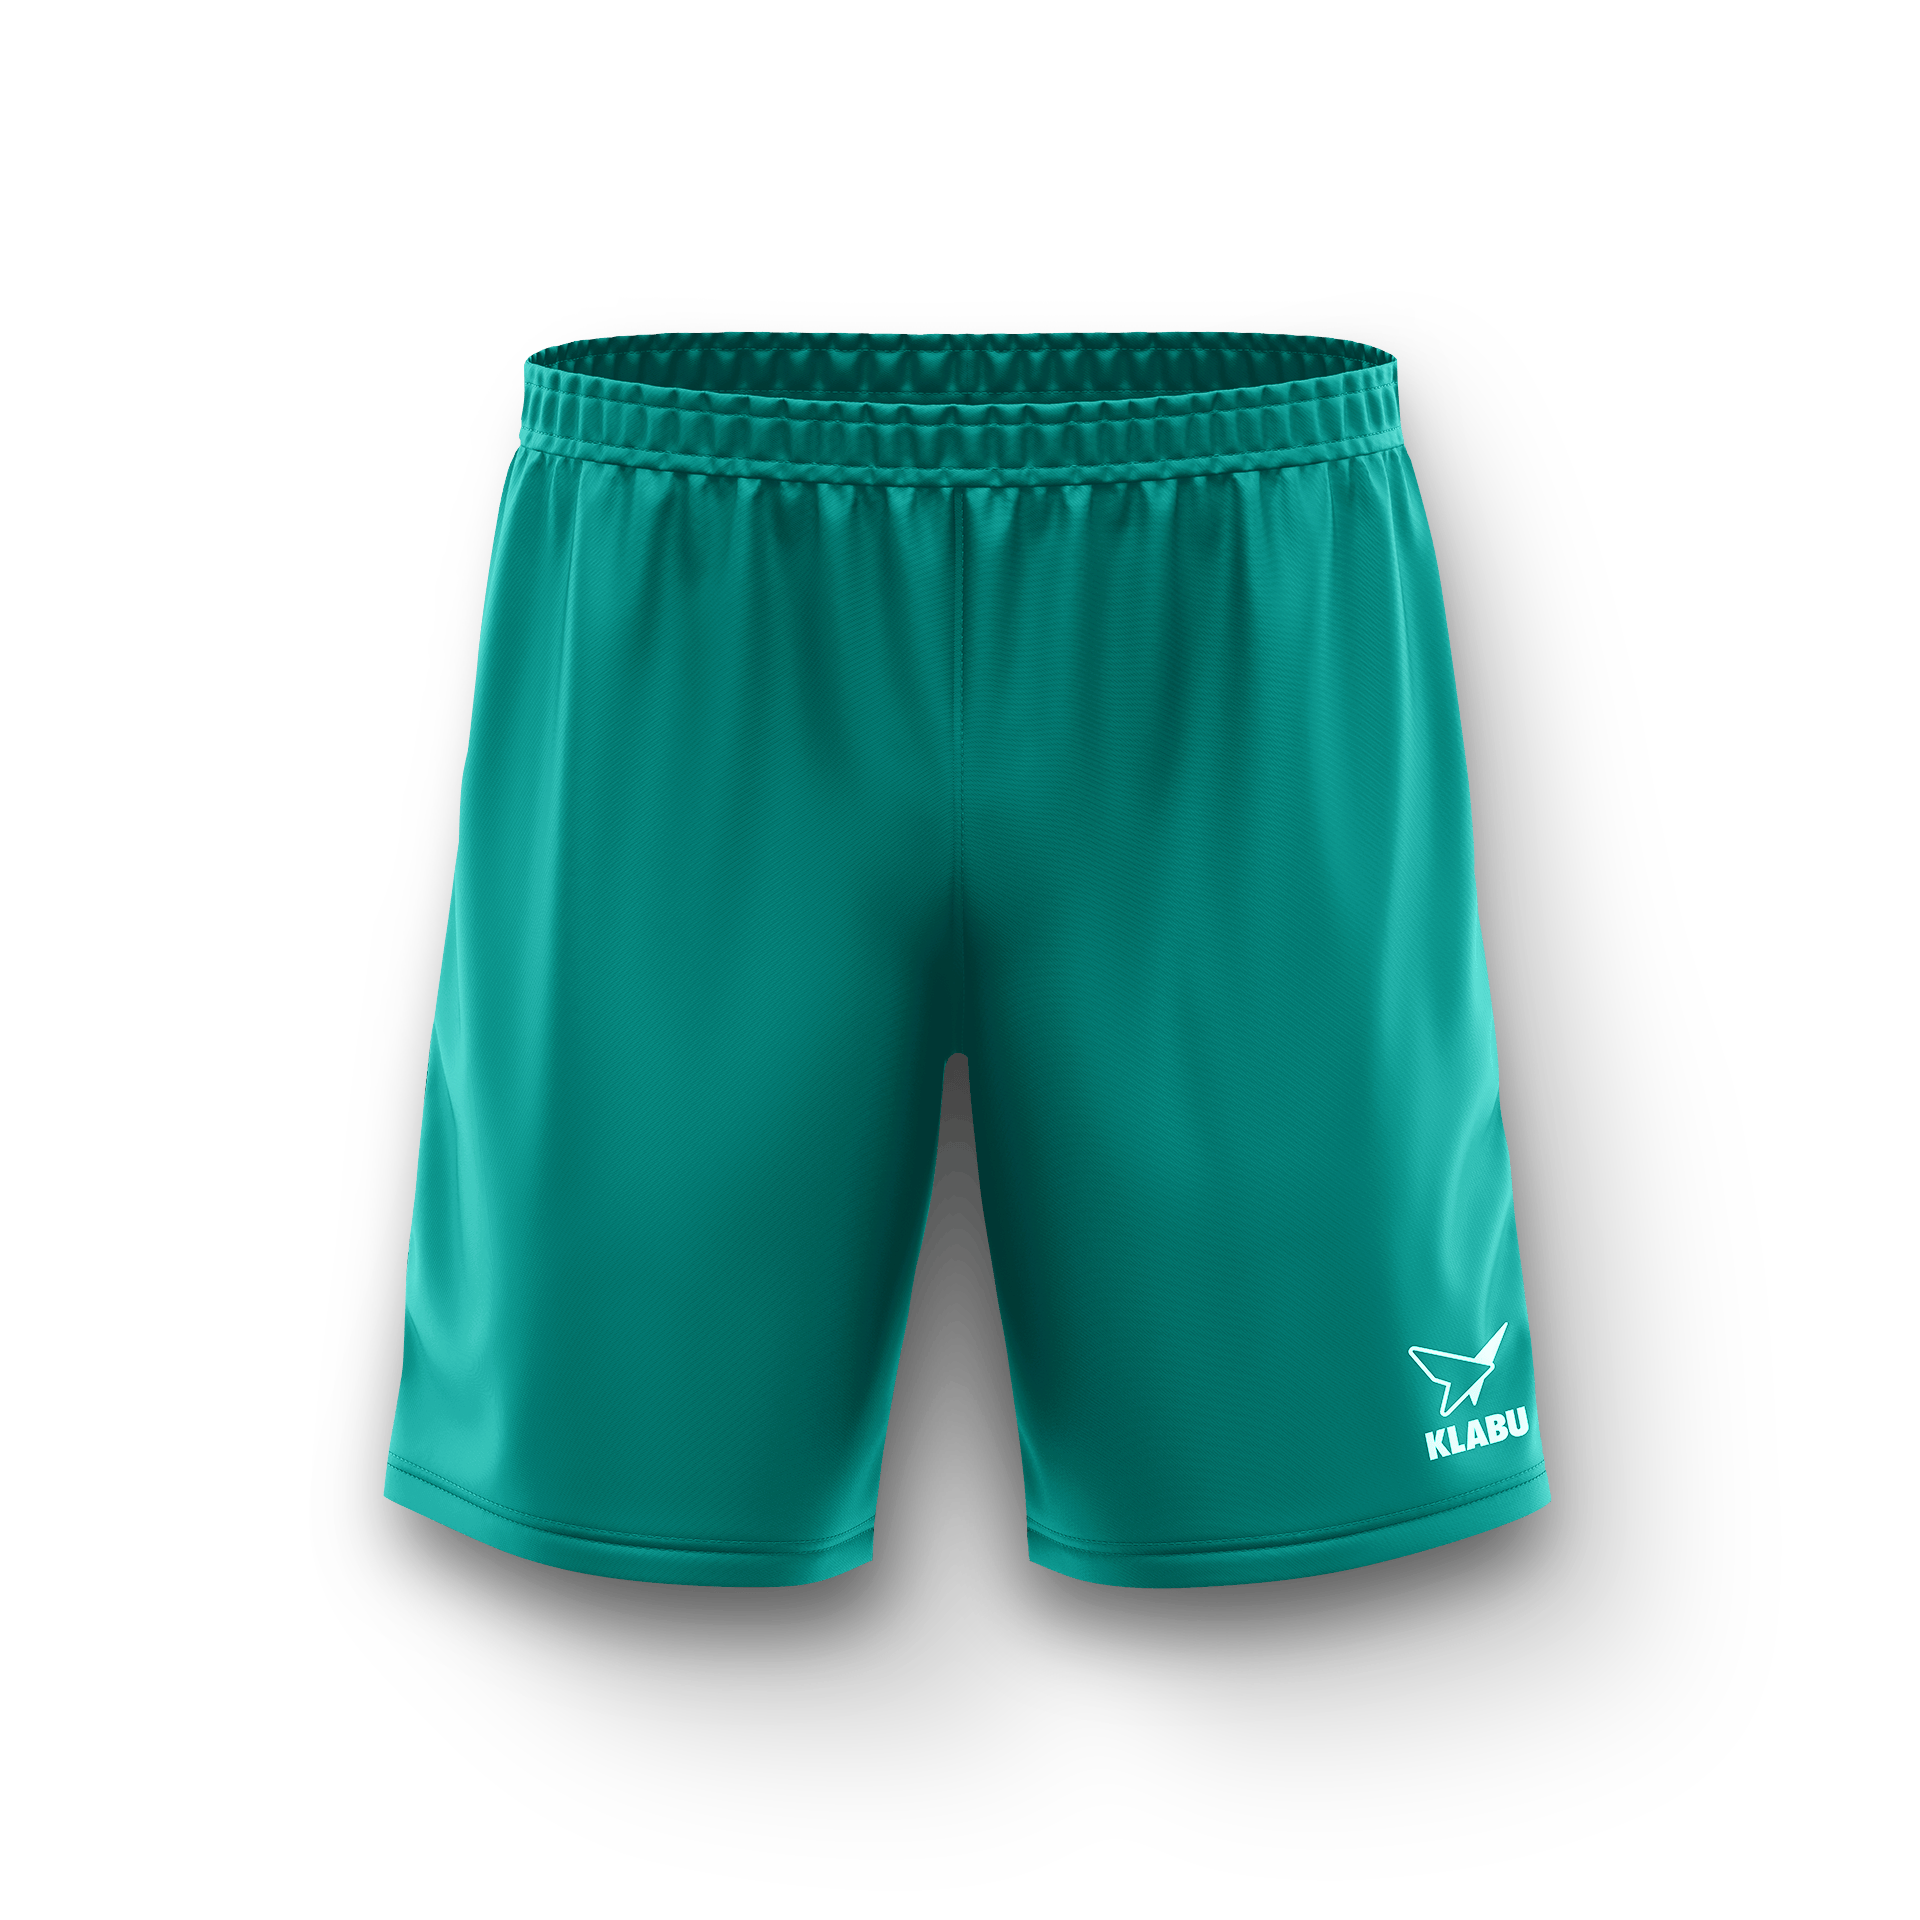 Teamwear Short Turquoise